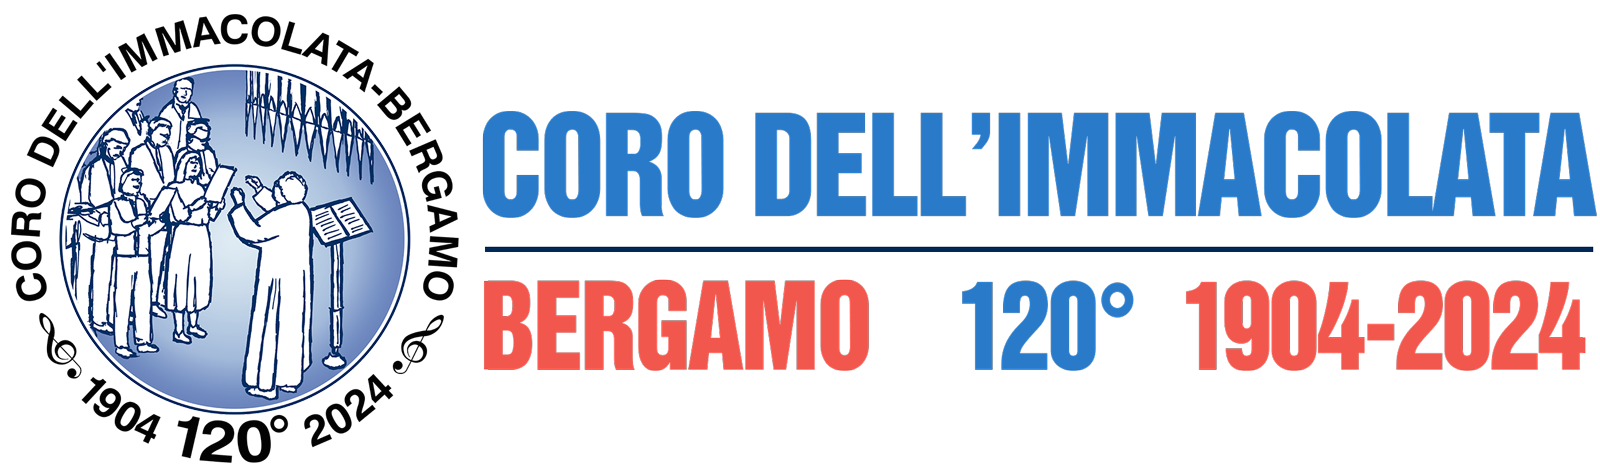 Coro Immacolata Bergamo Logo FESTA 120 ANNI